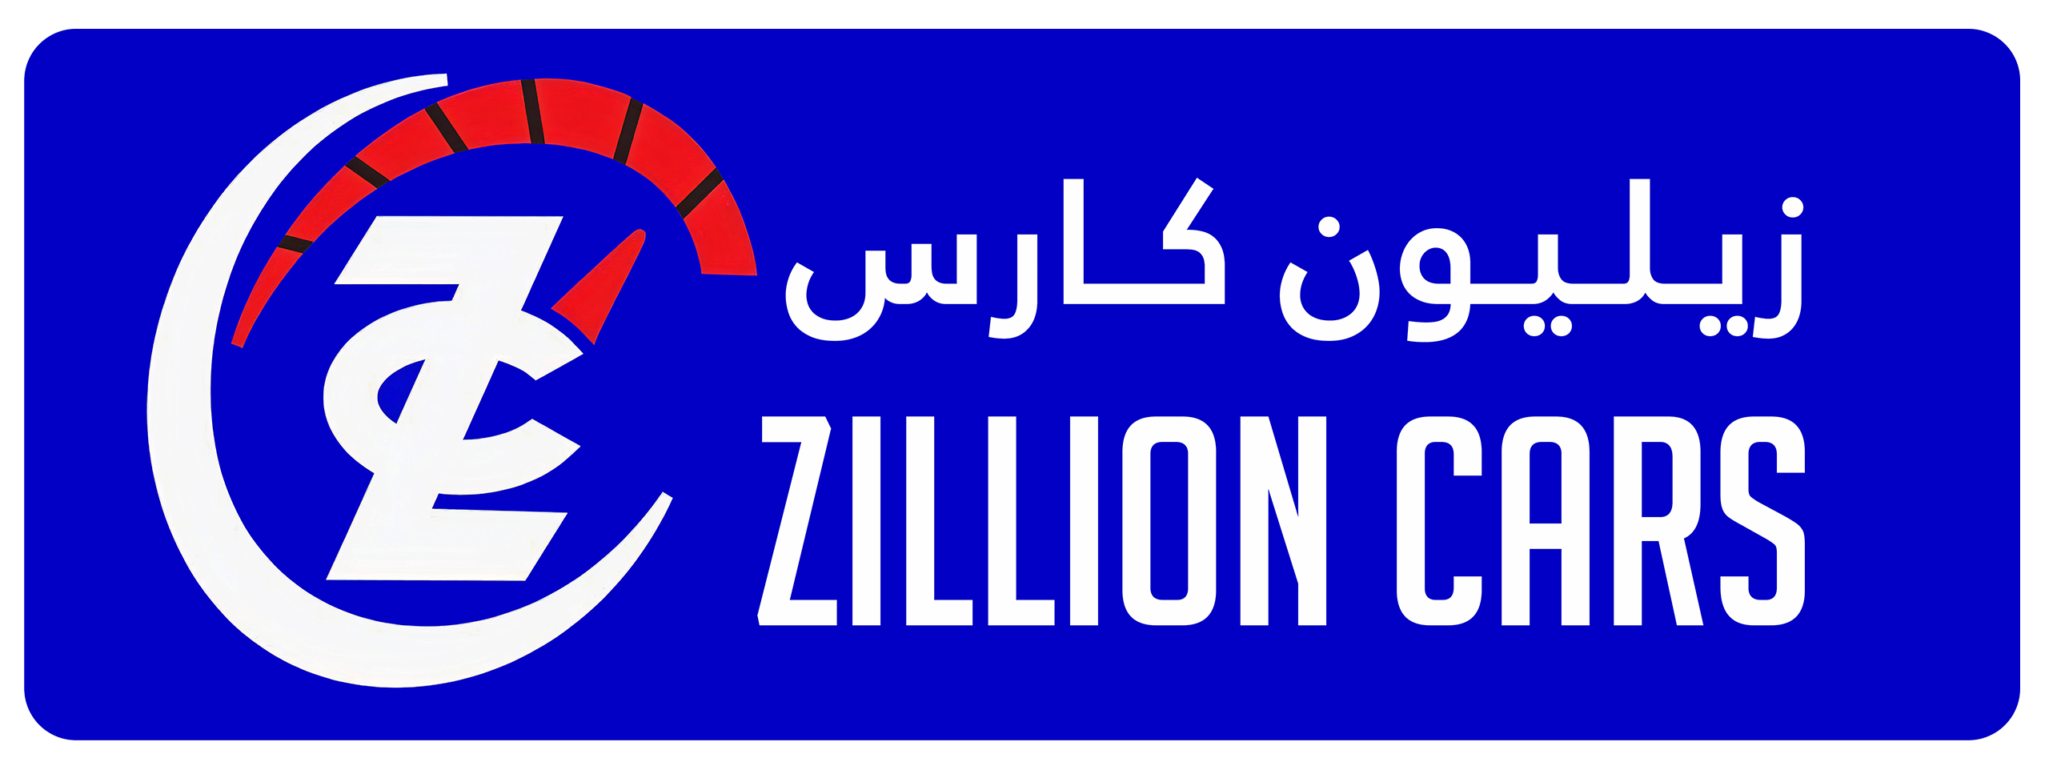 Zillion Cars